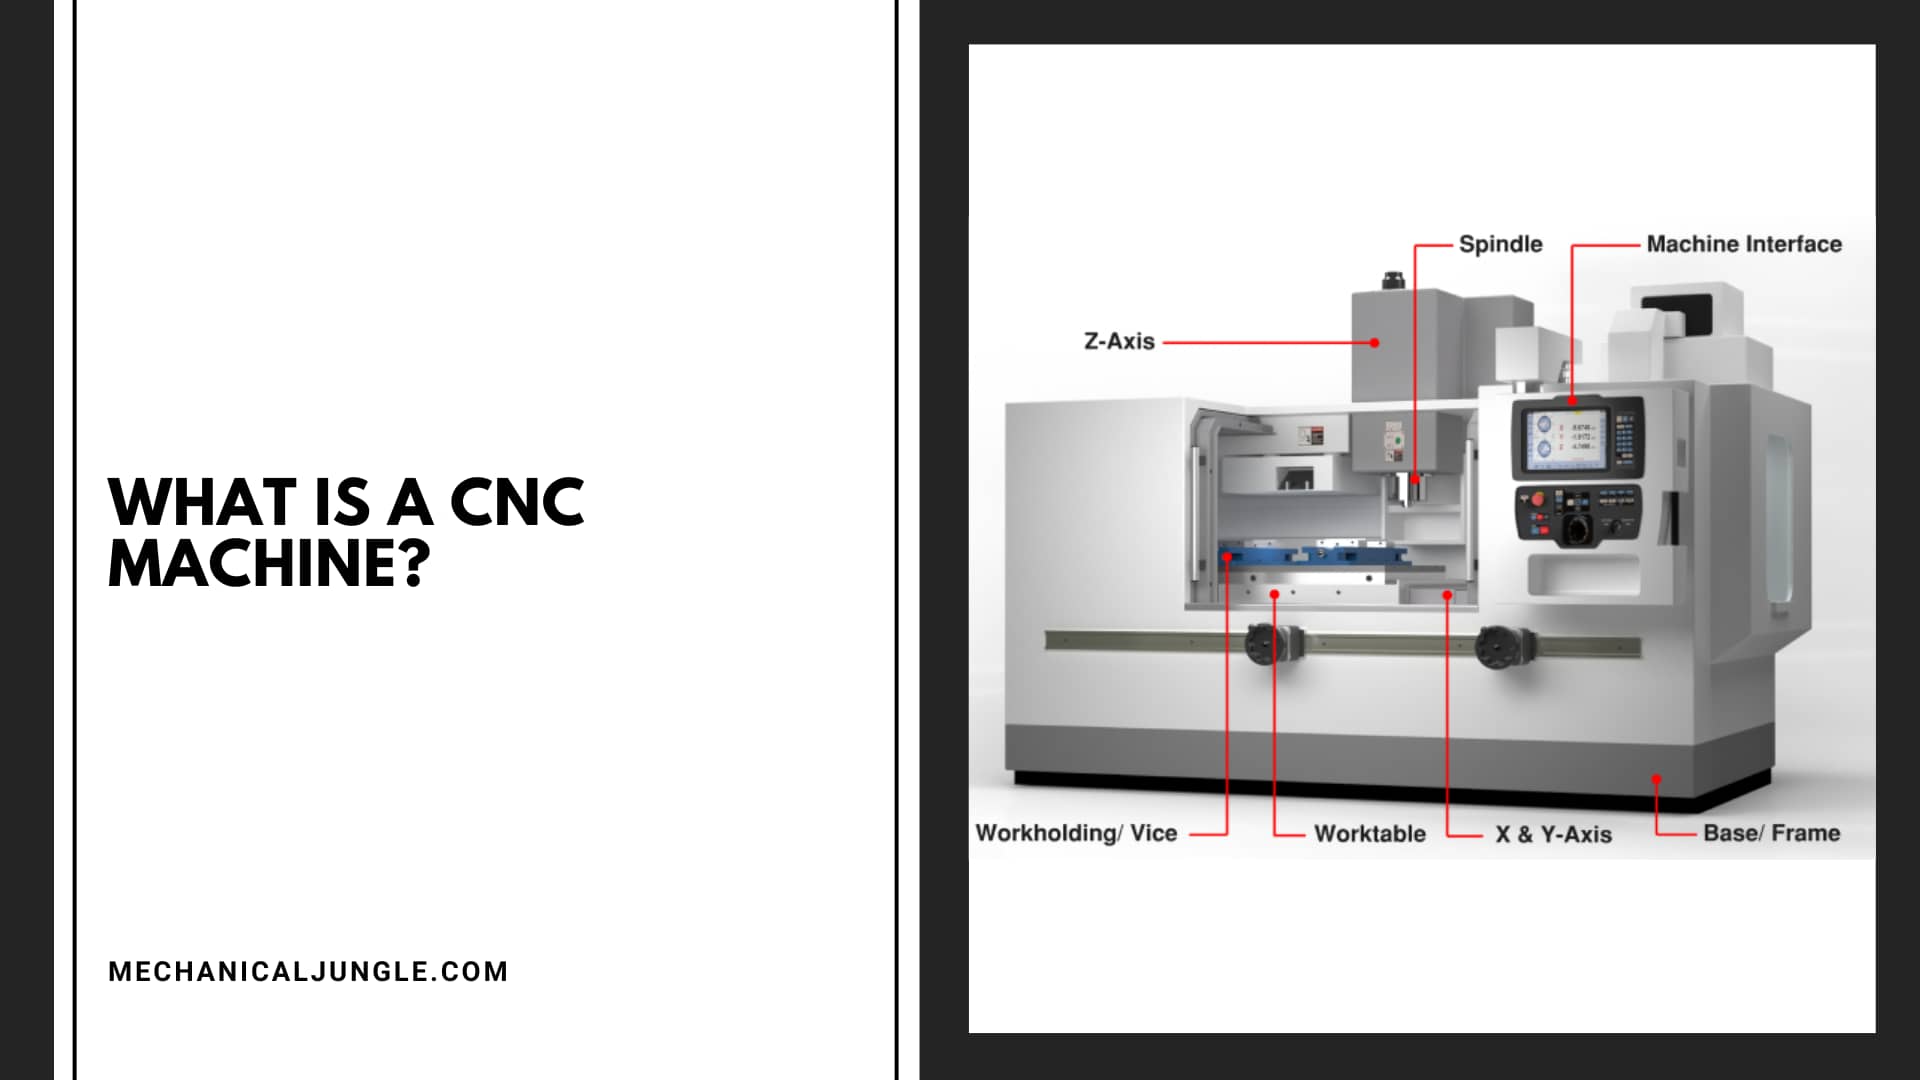 What Is a CNC Machine?